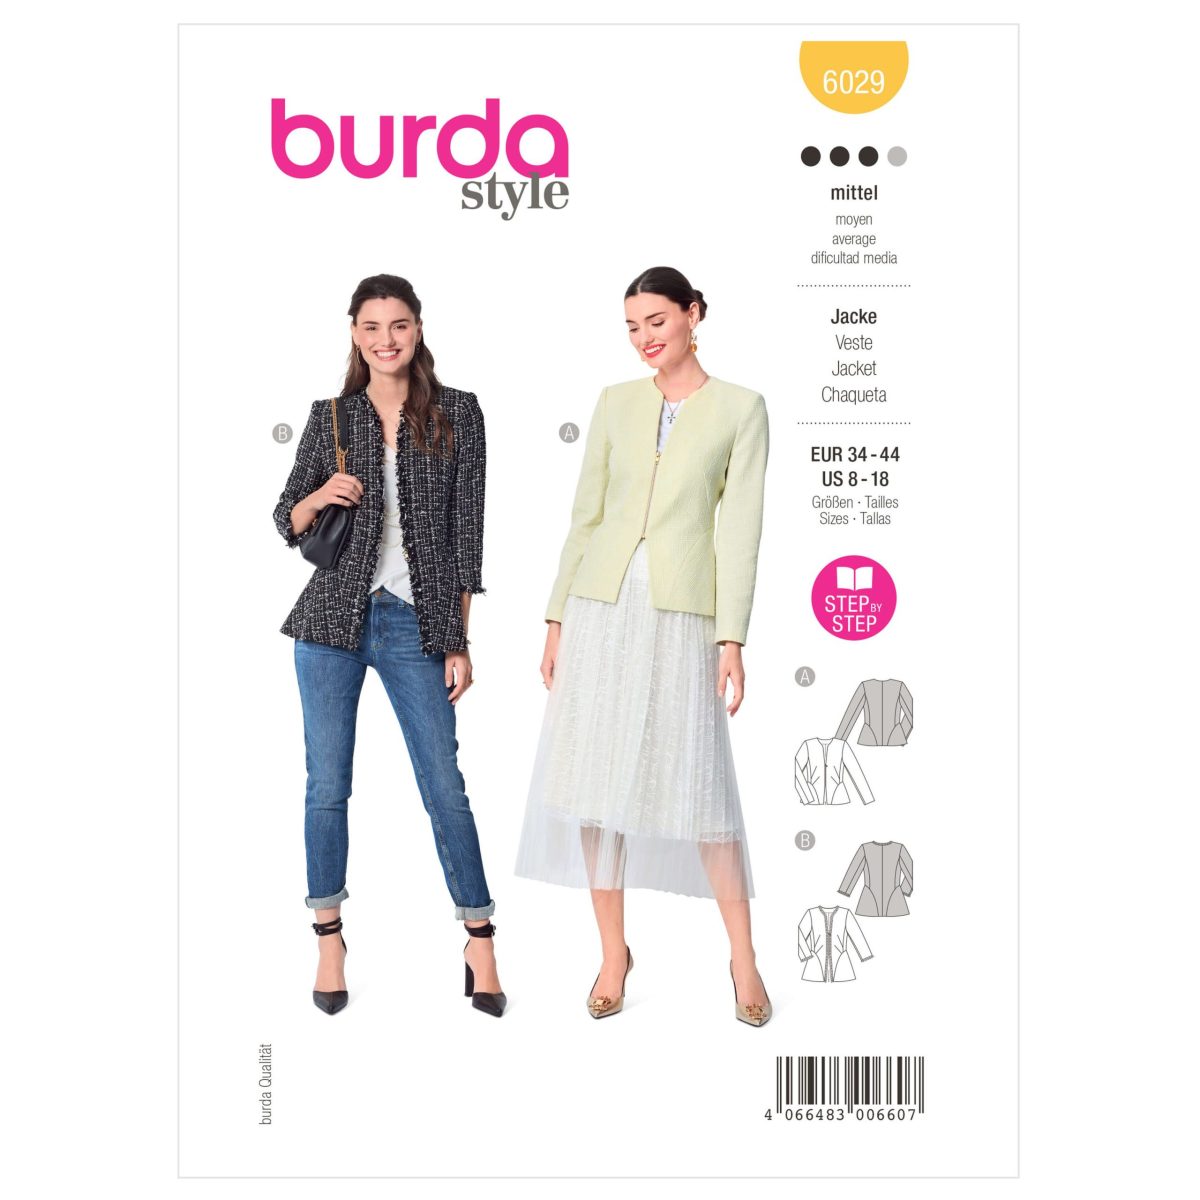 Burda Style Pattern 6029 Misses' Jacket